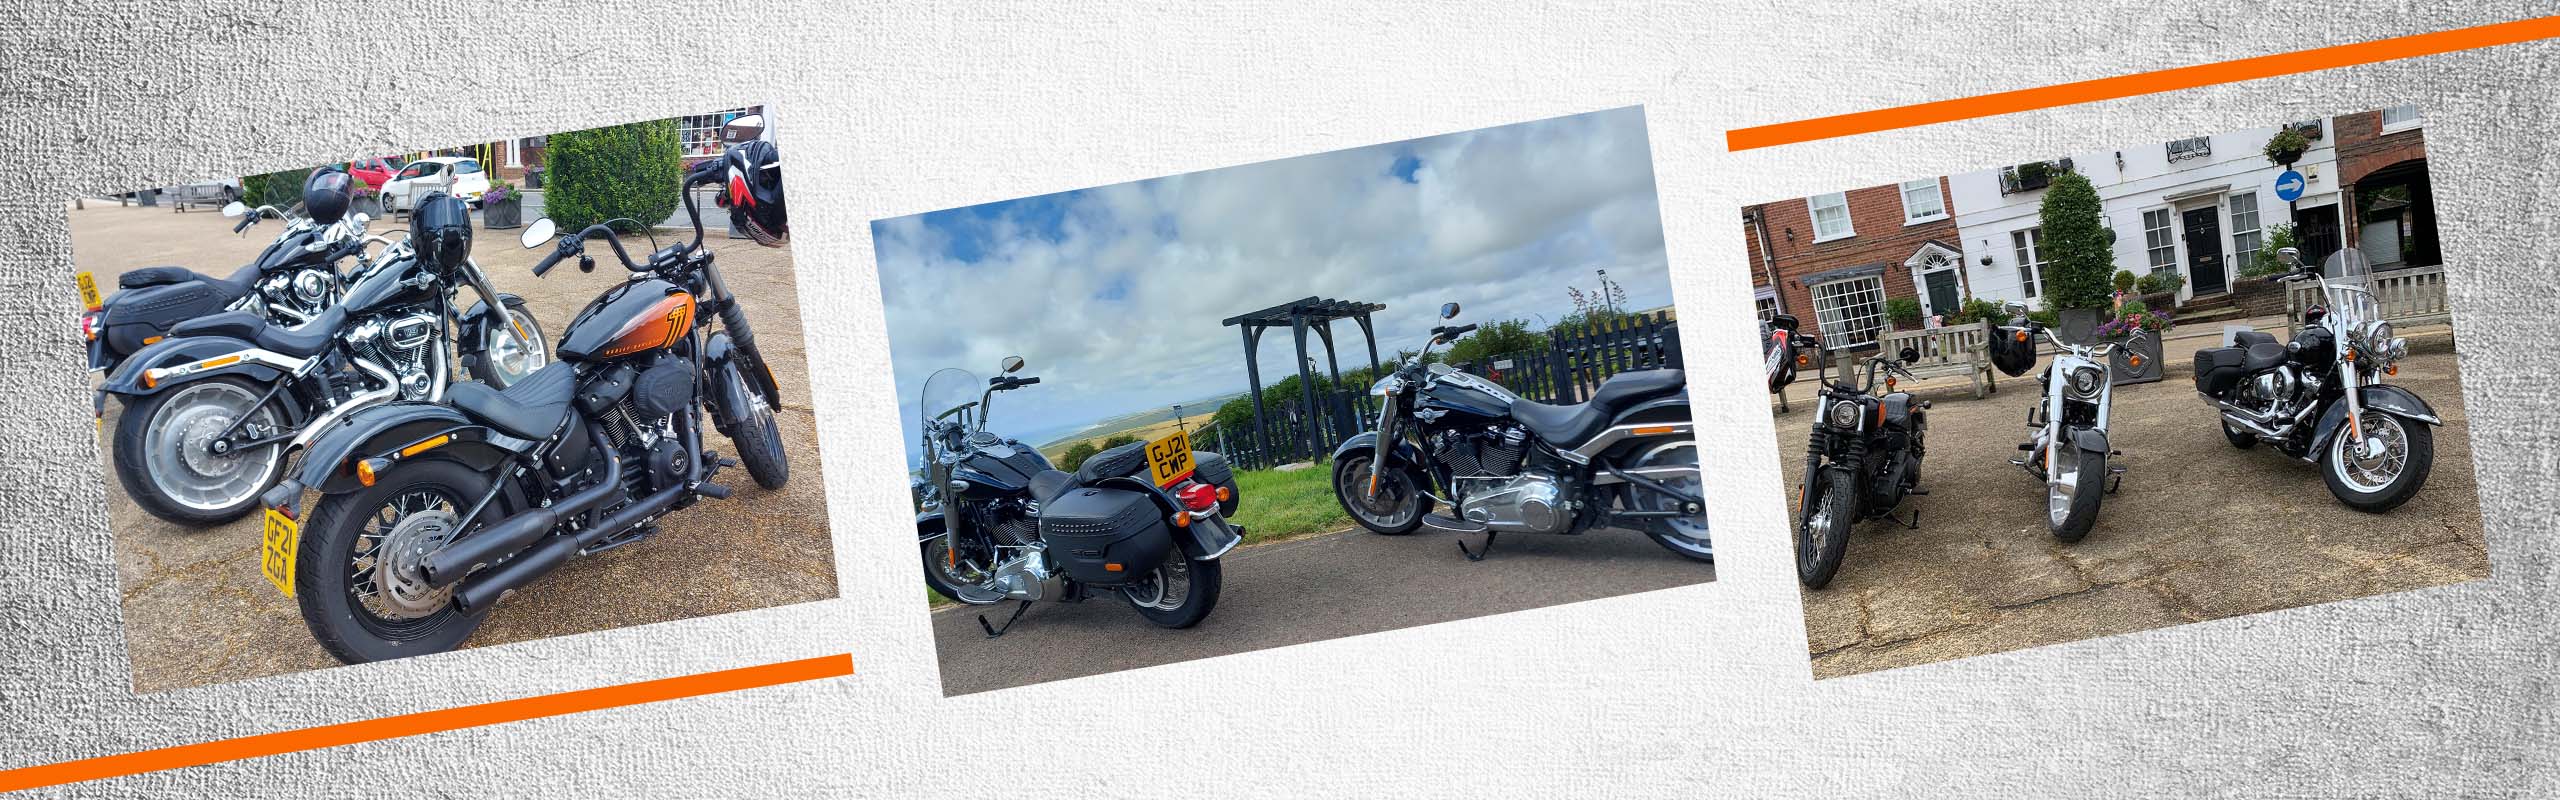 Harley-Davidson Road Trip Photos